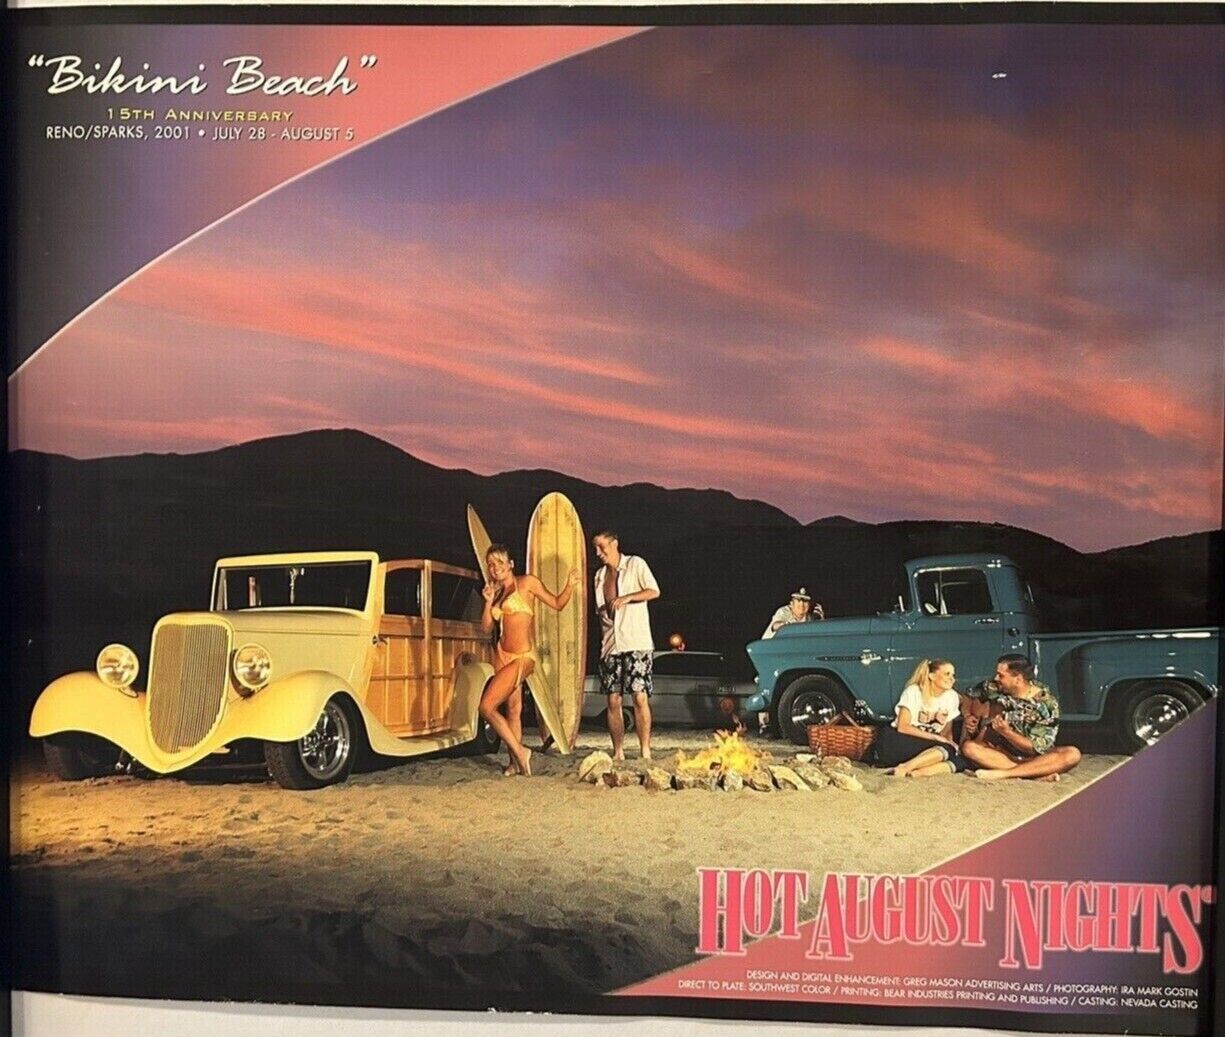 Hot August Nights Official Poster 2001 *22 x 28 Reno Car Show * VTG Bikini Beach